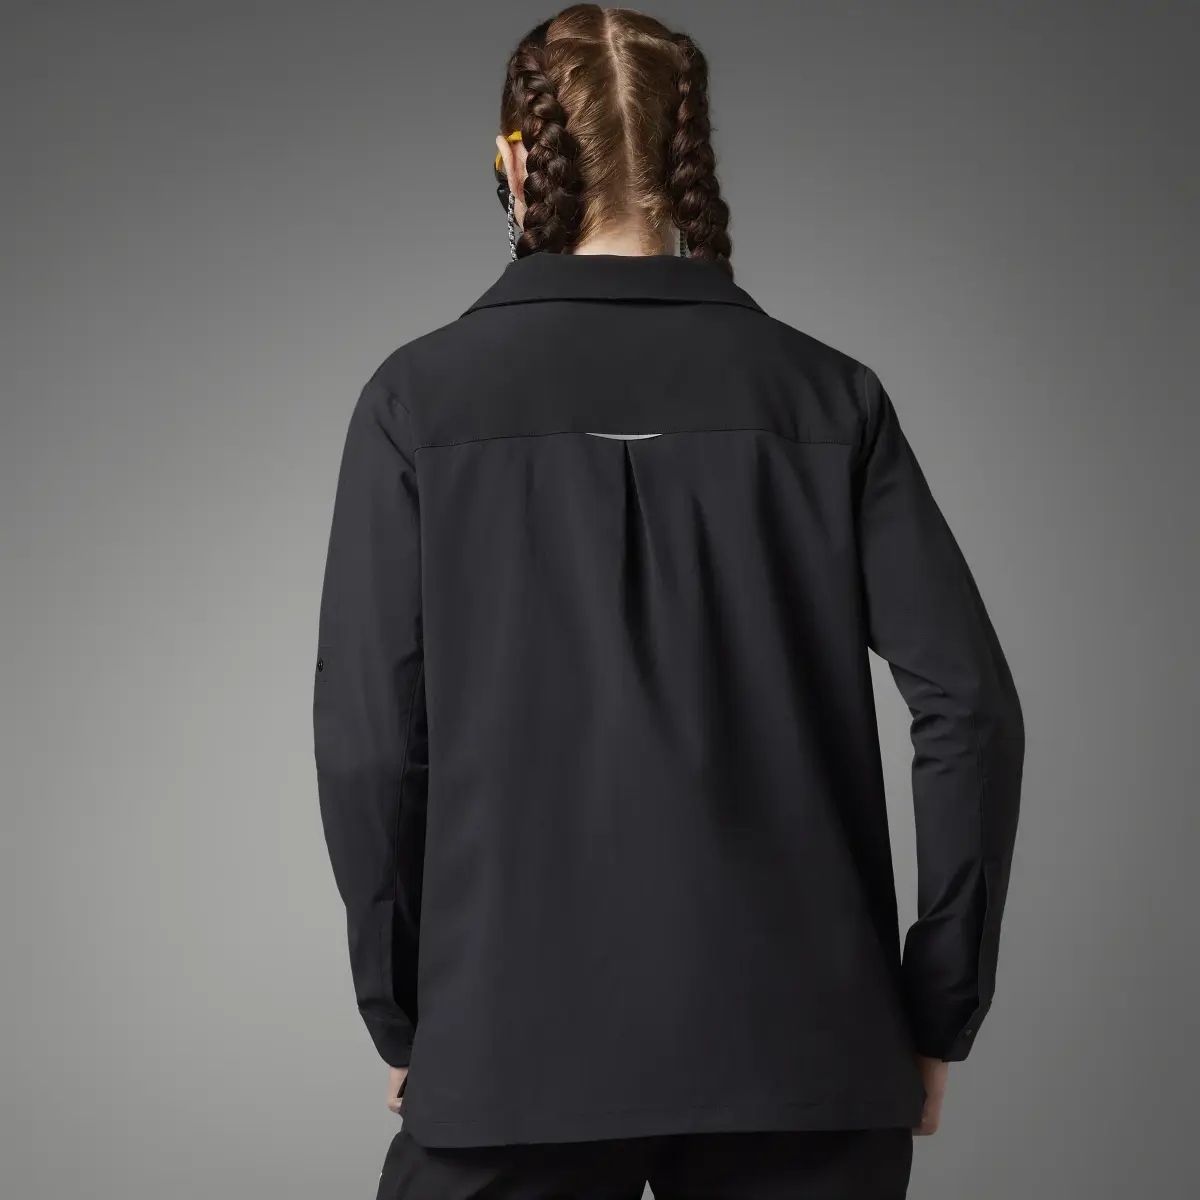 Adidas National Geographic Long Sleeve Shirt. 2